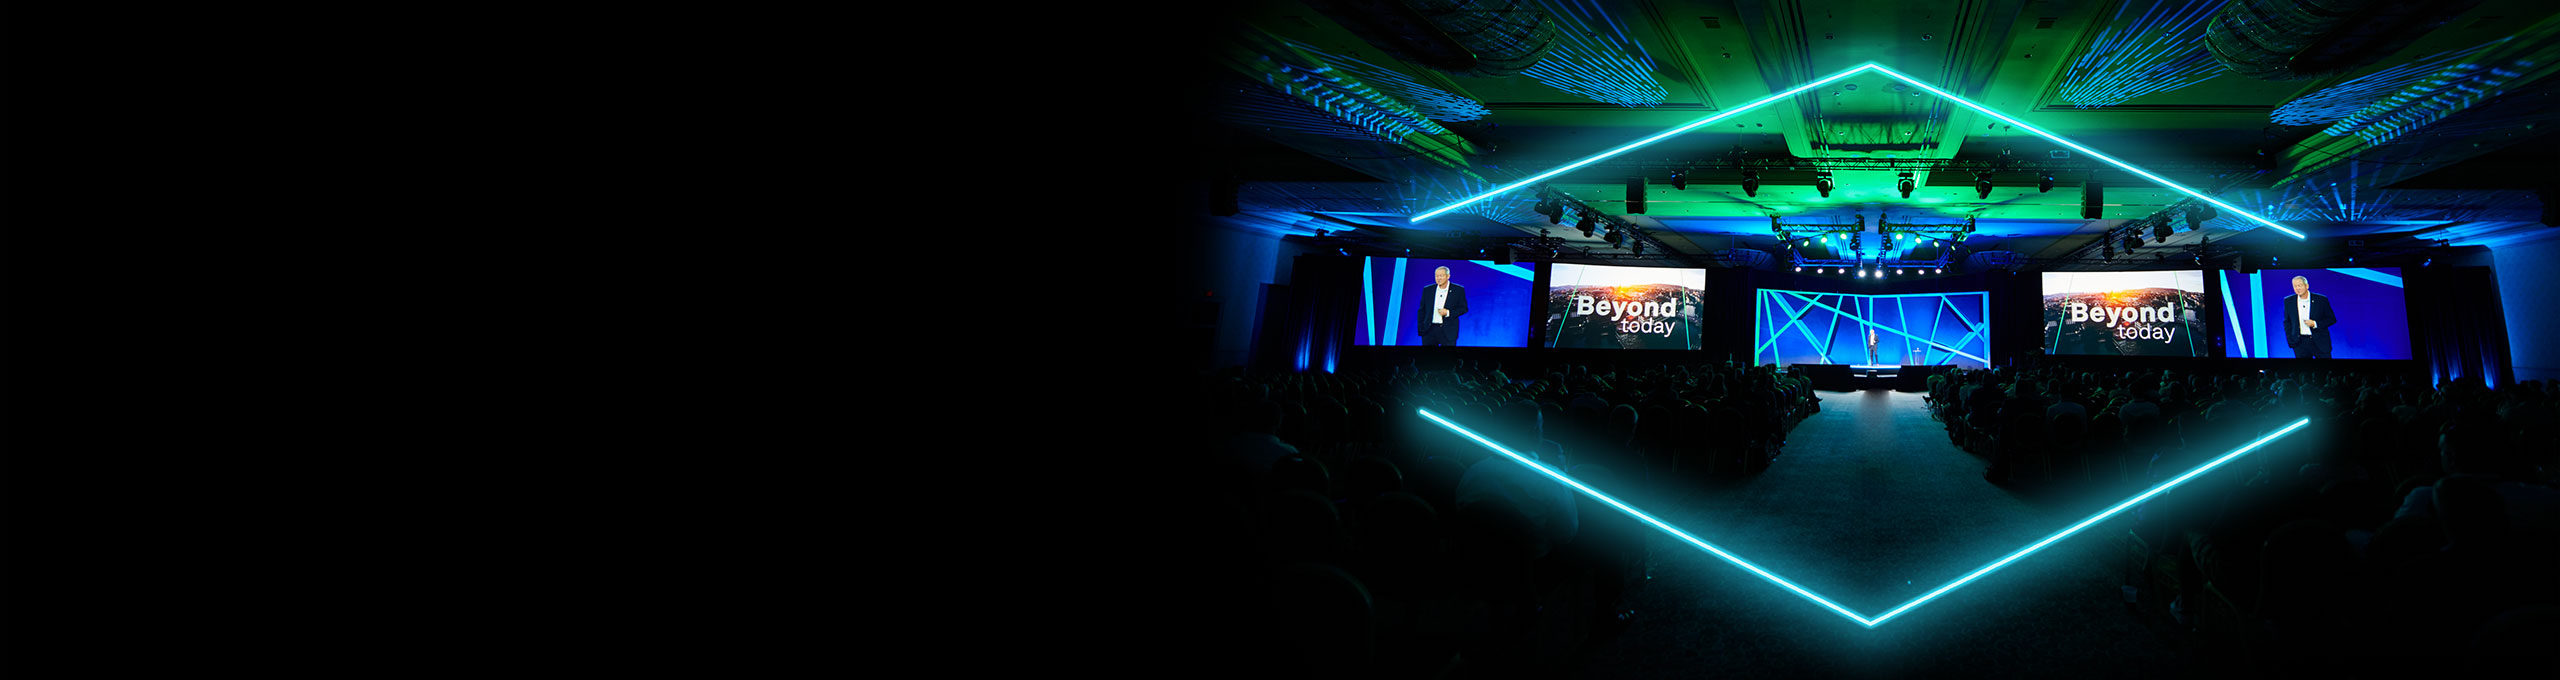 hxgn live promo image keynote stage